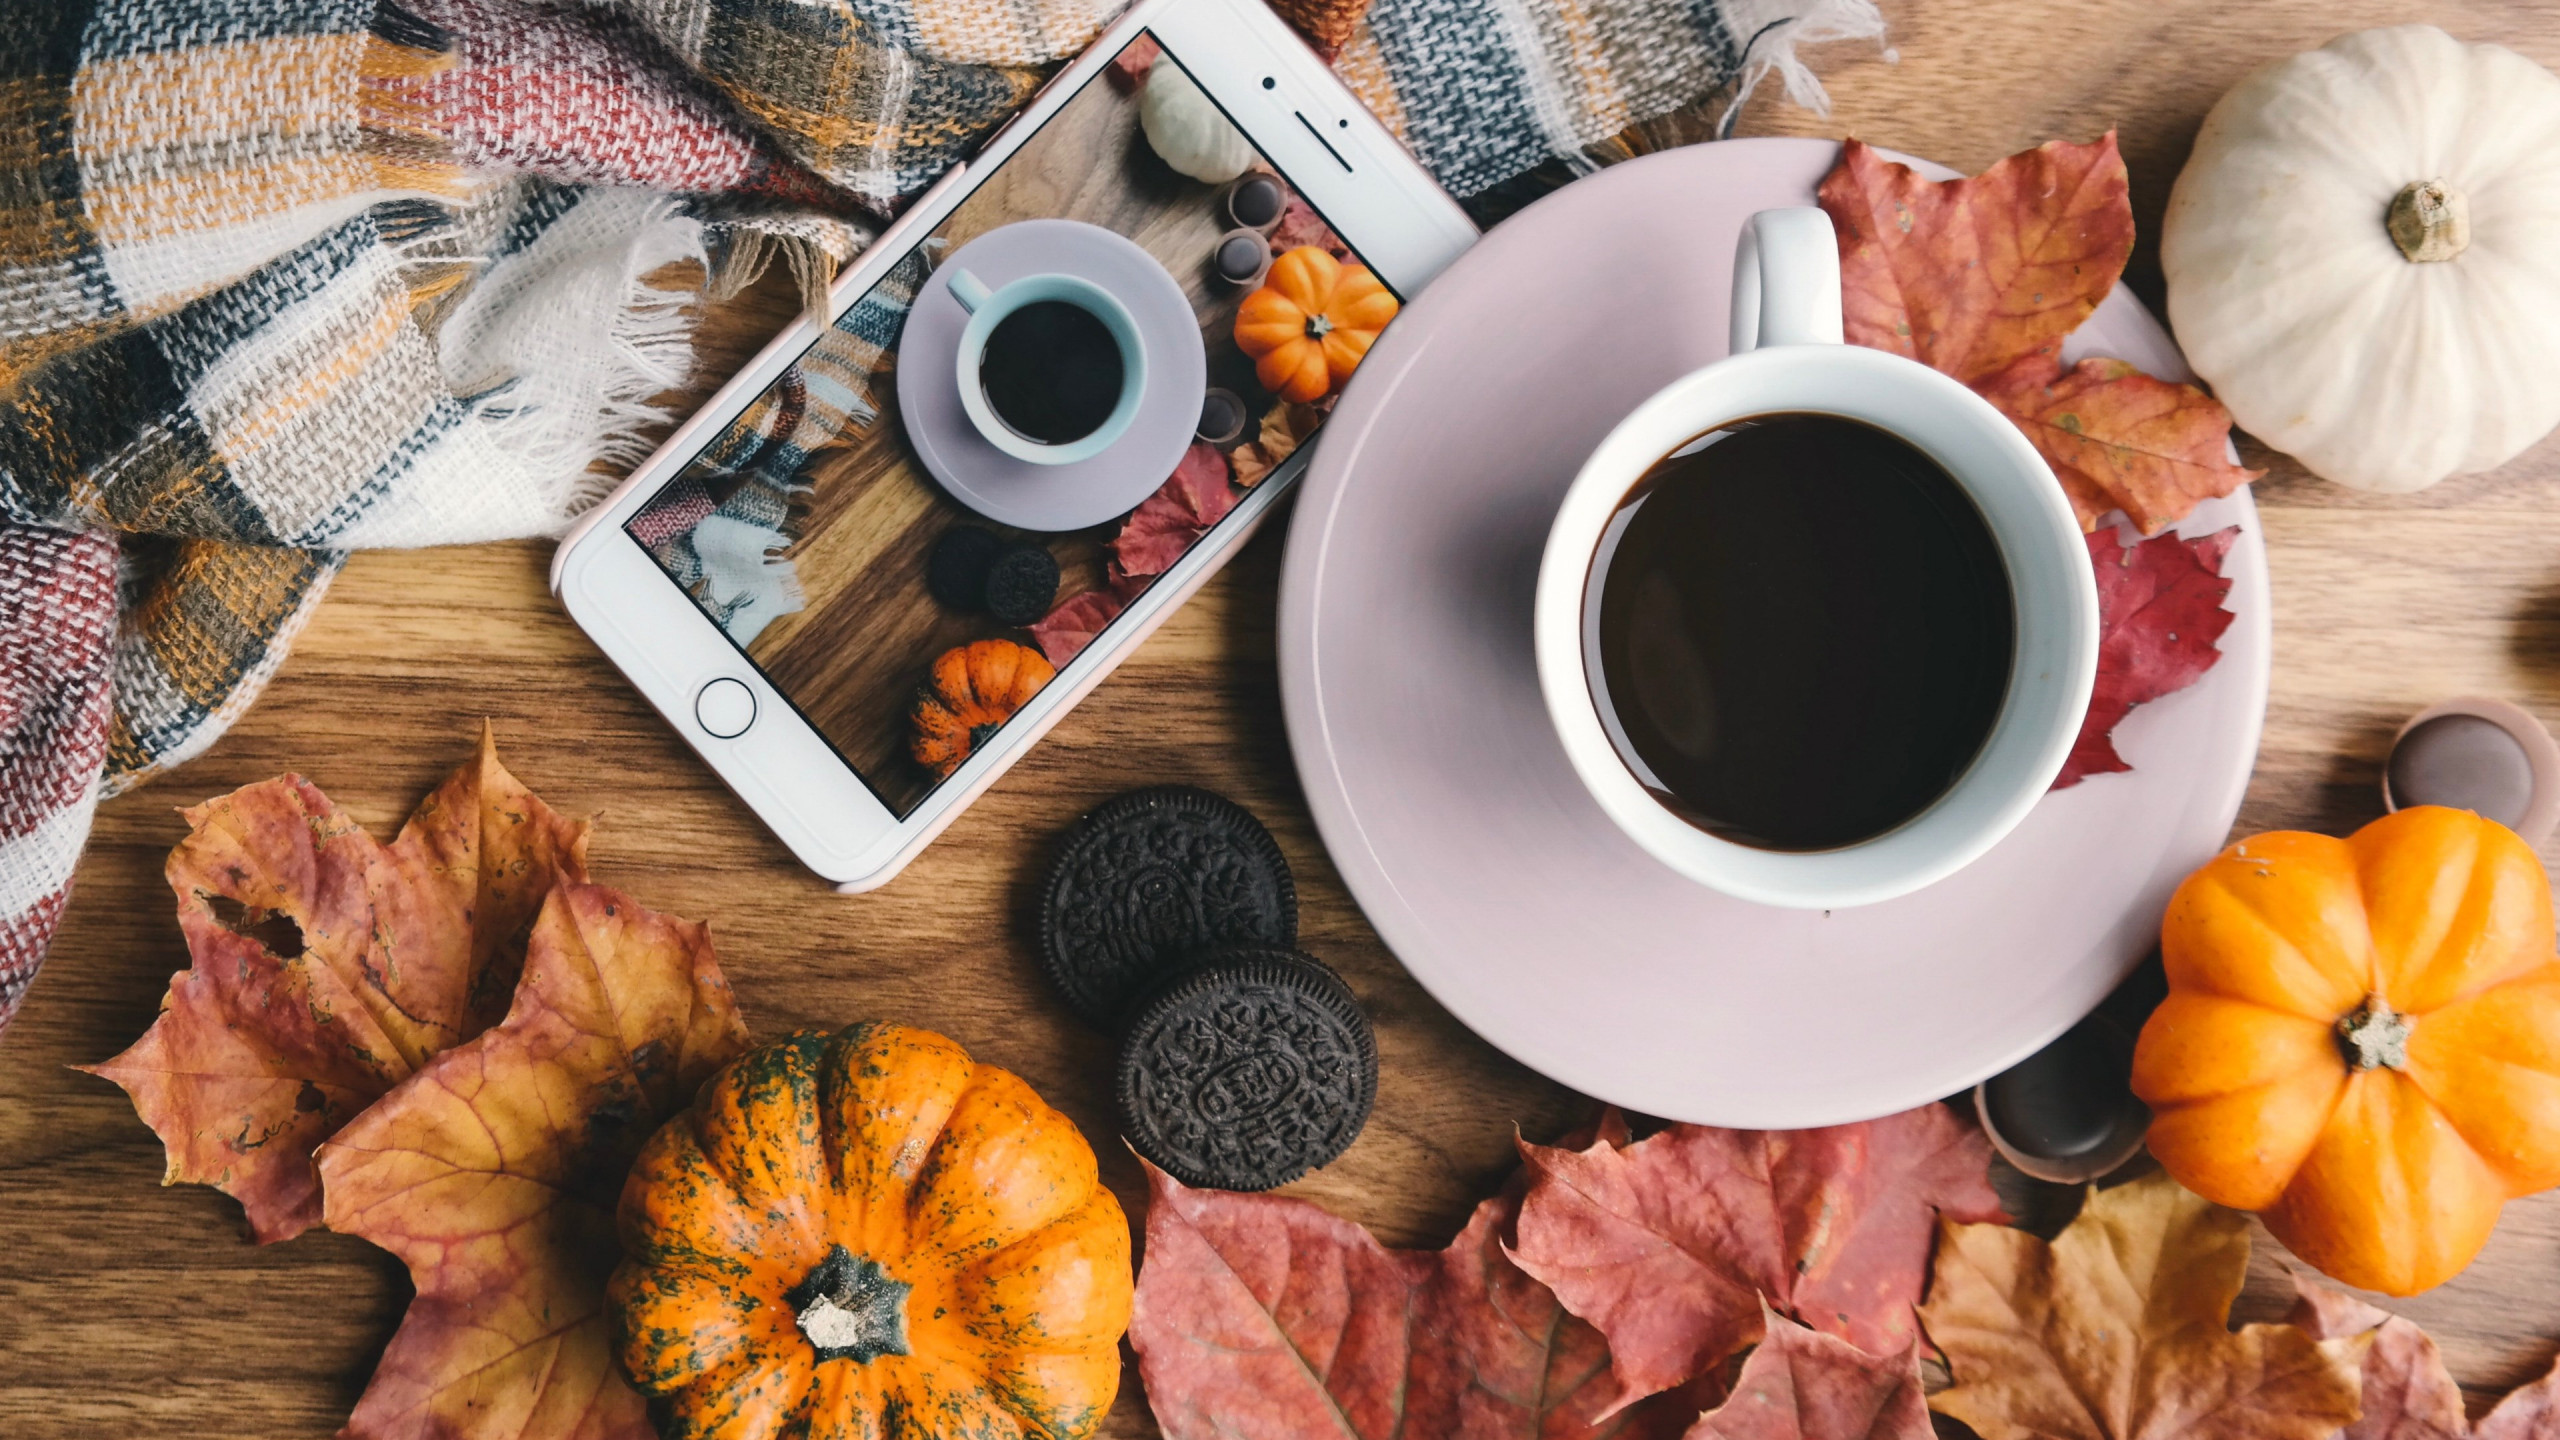 Download wallpaper: Autumn, coffee, pumpkins, leaves 2560x1440